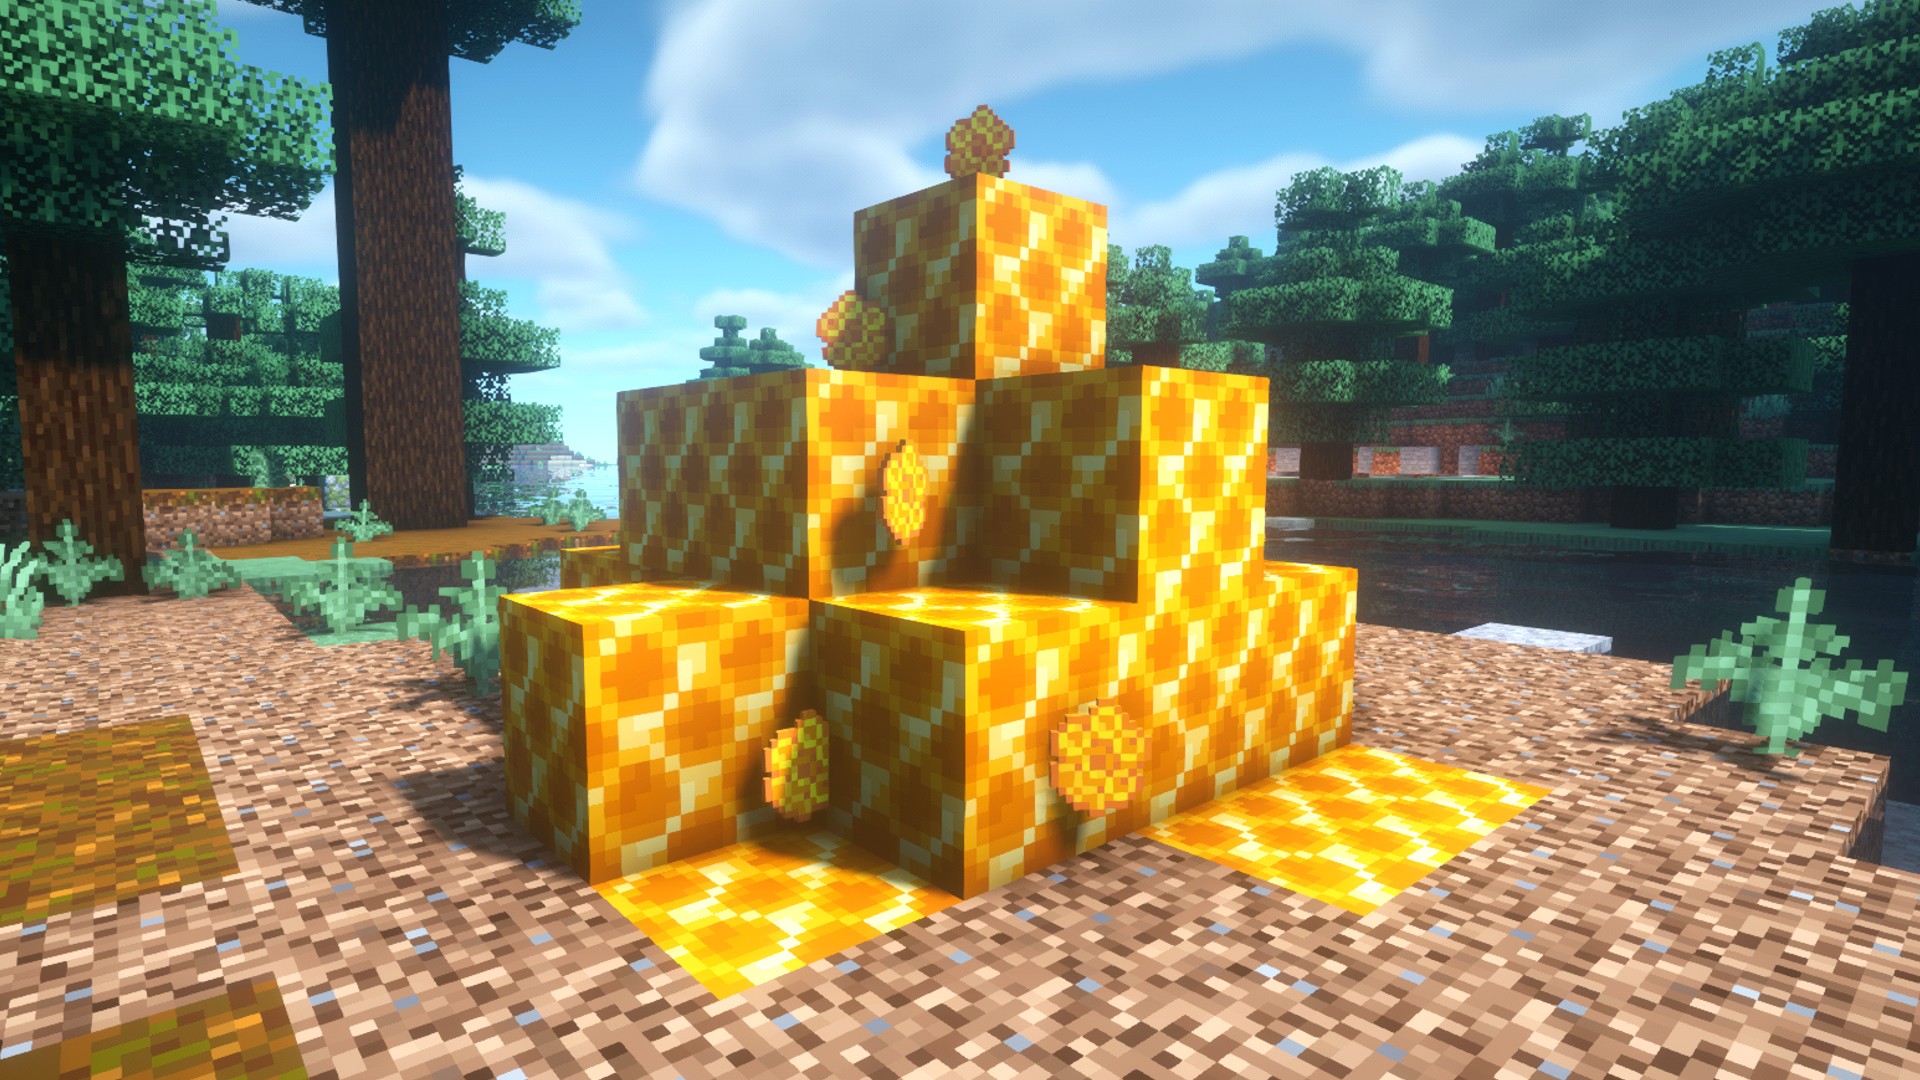 Honey Block - Minecraft Block Guide 